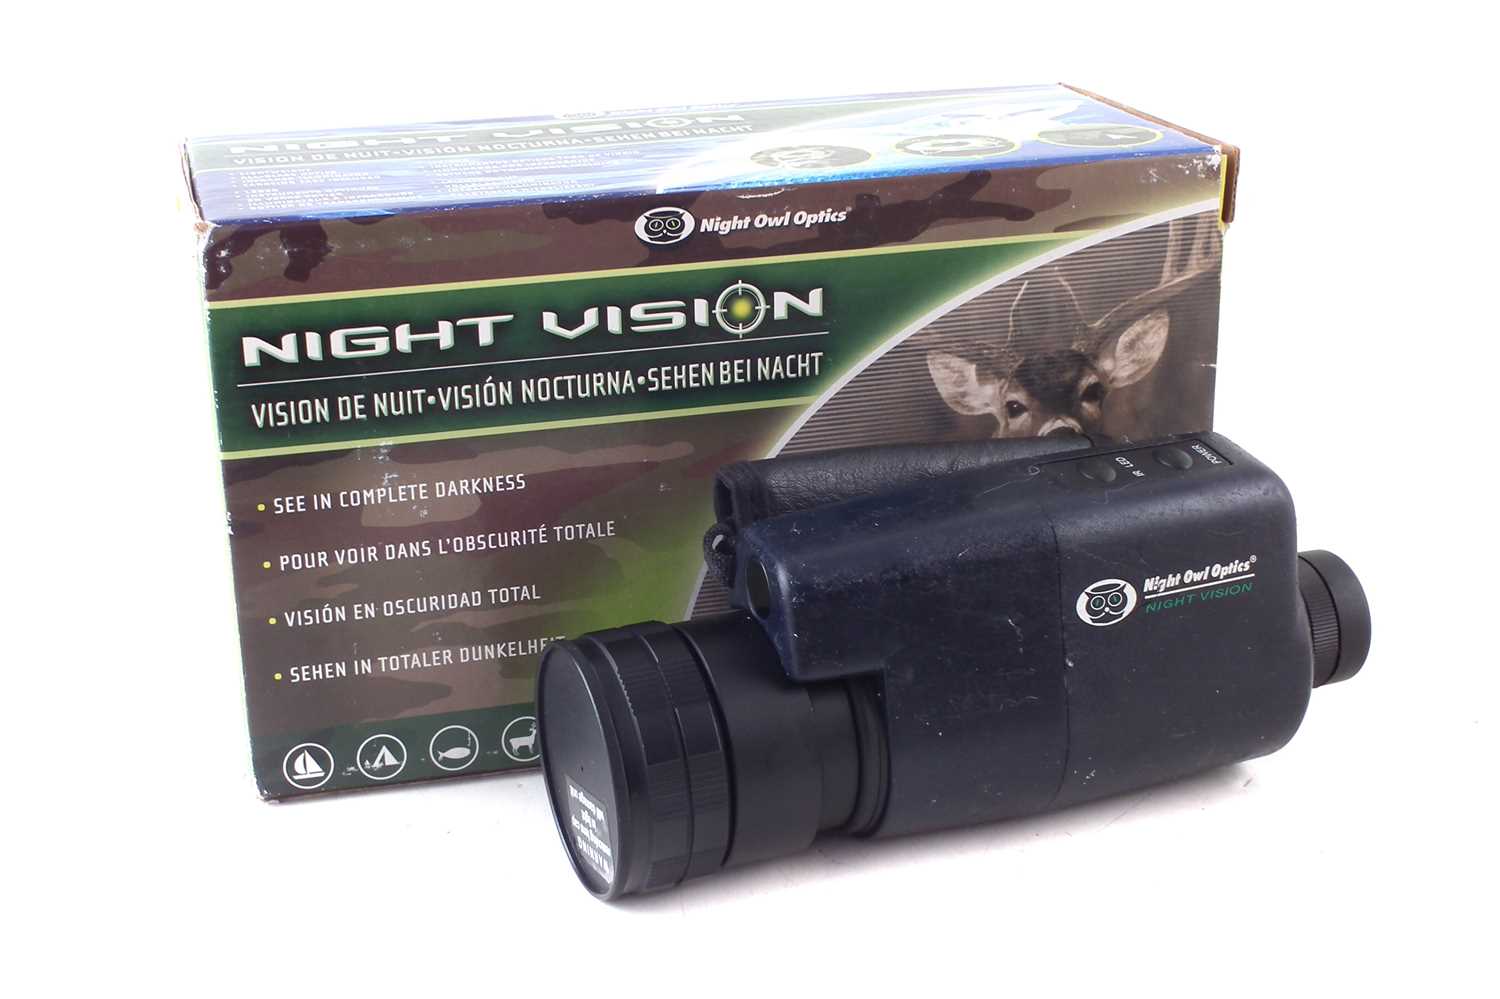 Night Owl Optics Explorer night vision